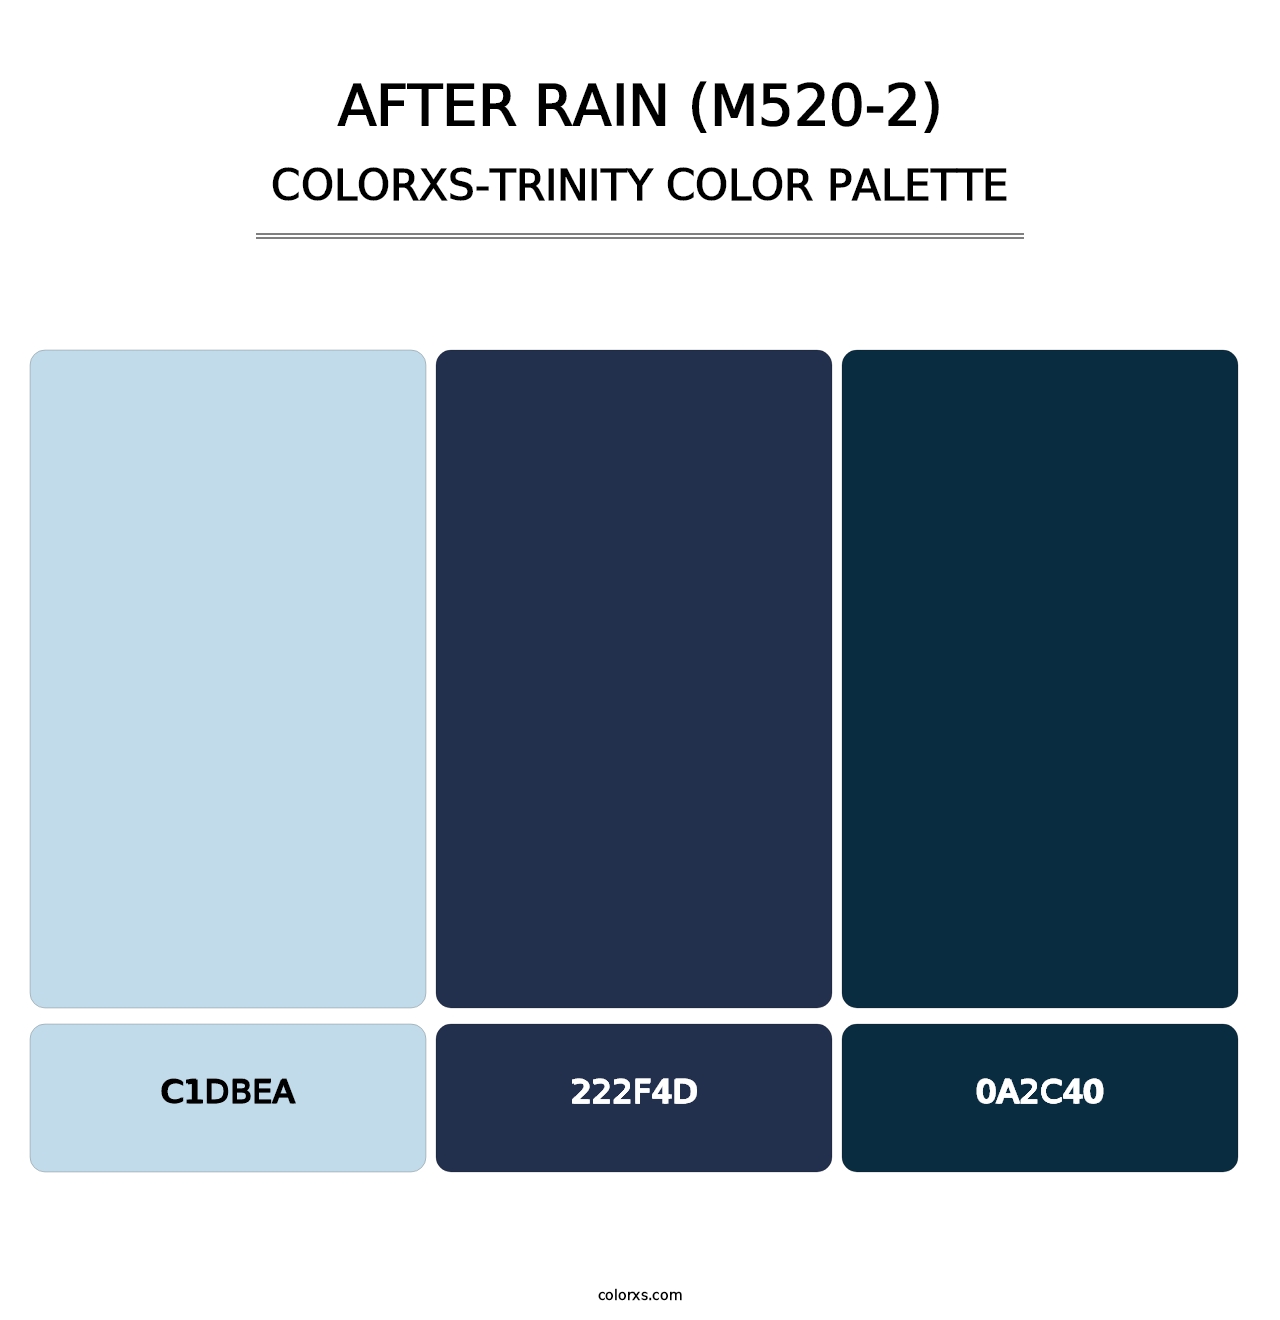 After Rain (M520-2) - Colorxs Trinity Palette